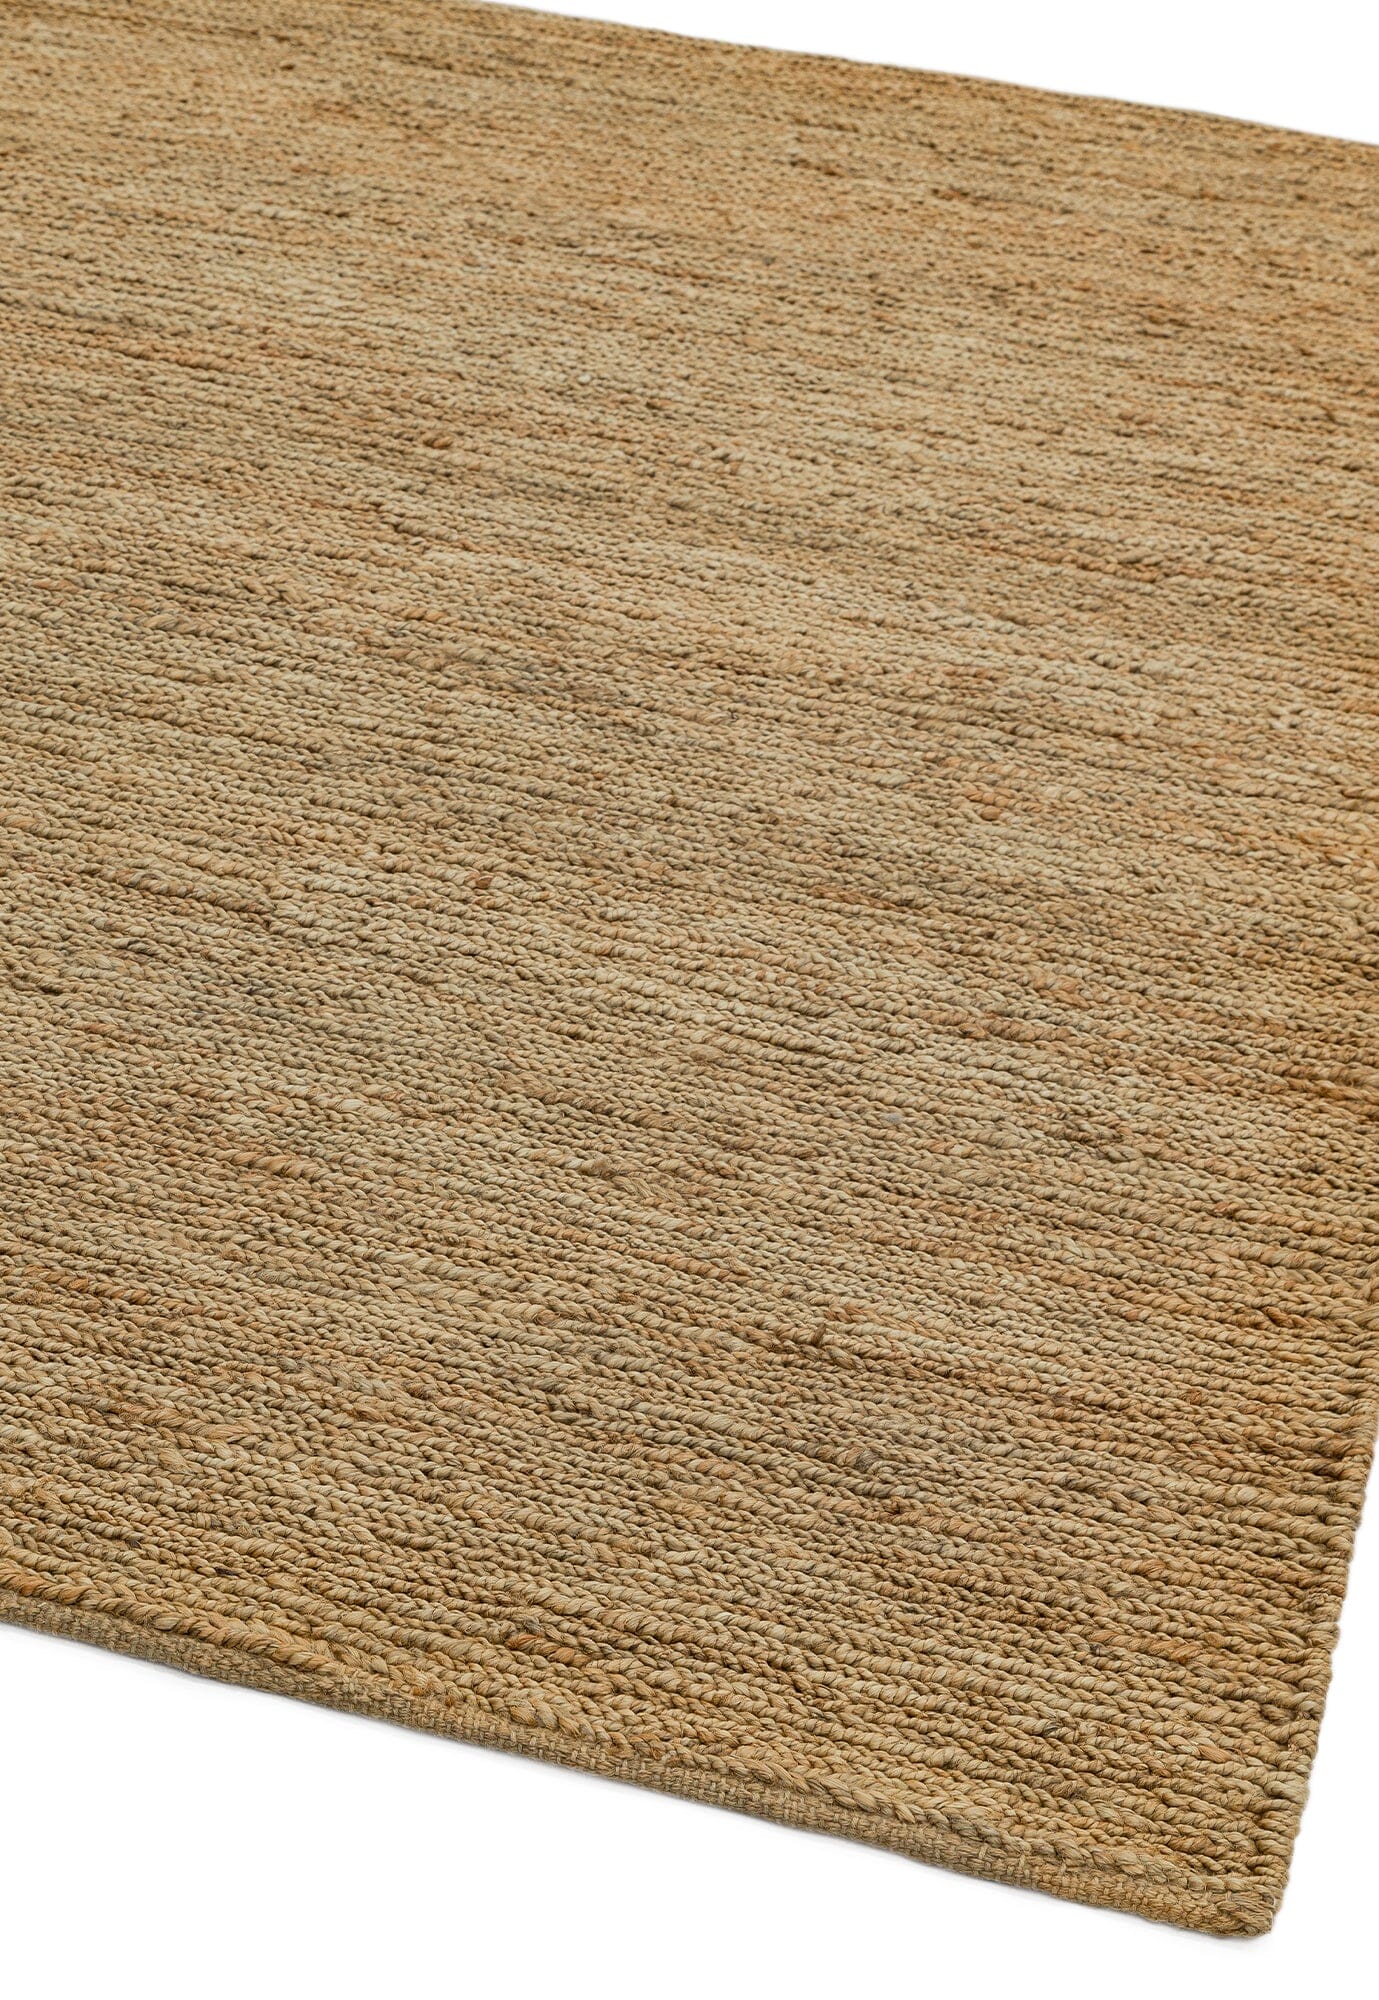  Asiatic Carpets-Asiatic Carpets Soumak Hand Woven Rug Natural - 160 x 230cm-Beige, Natural 861 